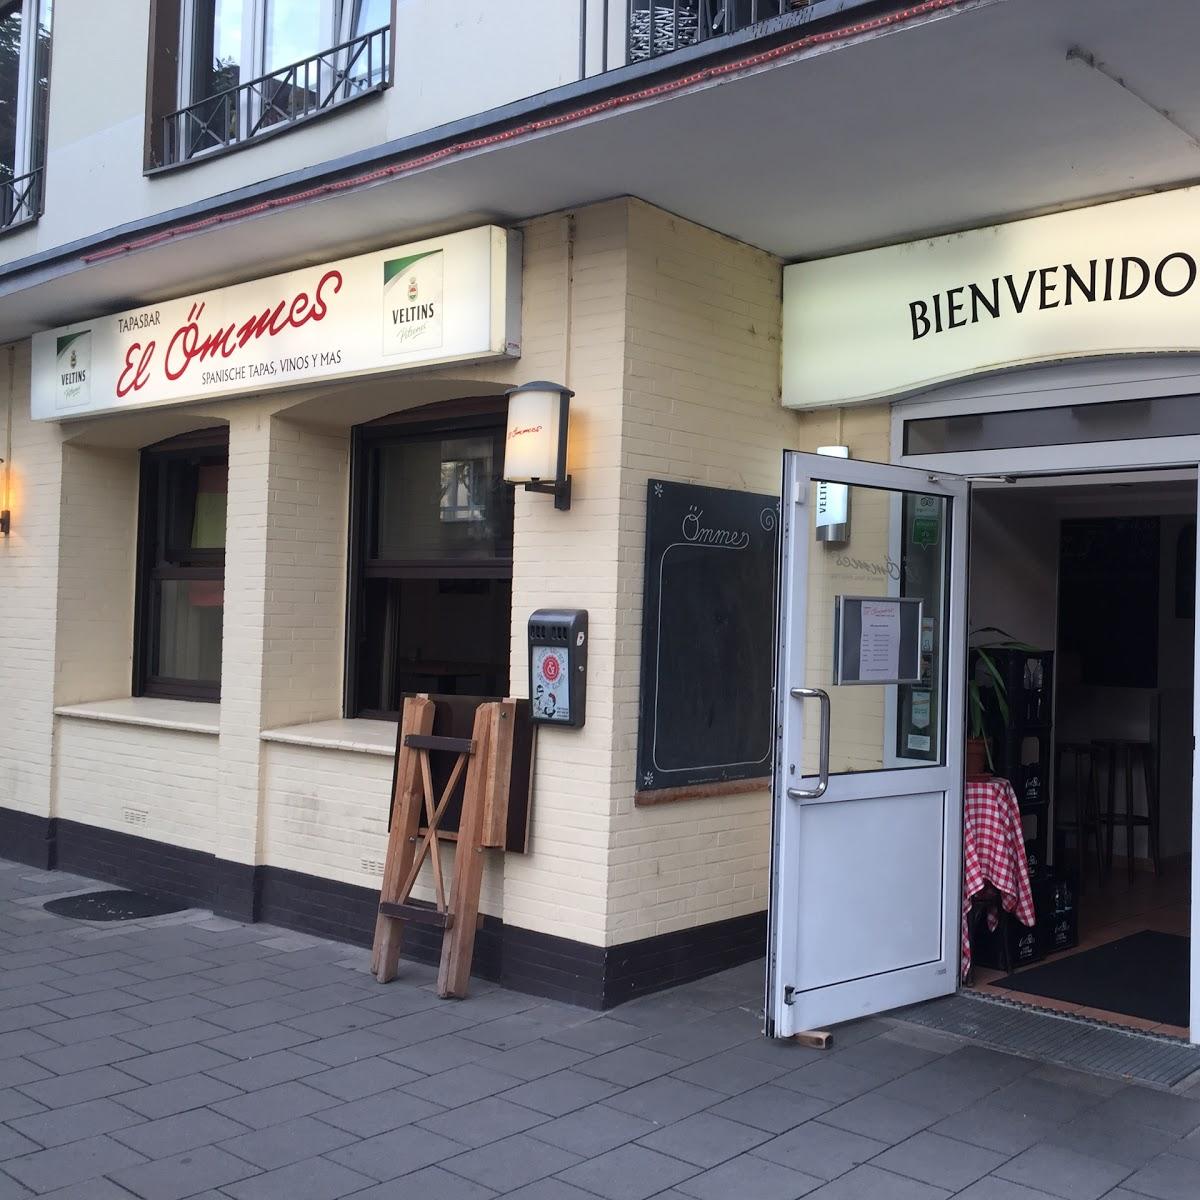 Restaurant "El Ömmes" in Düsseldorf